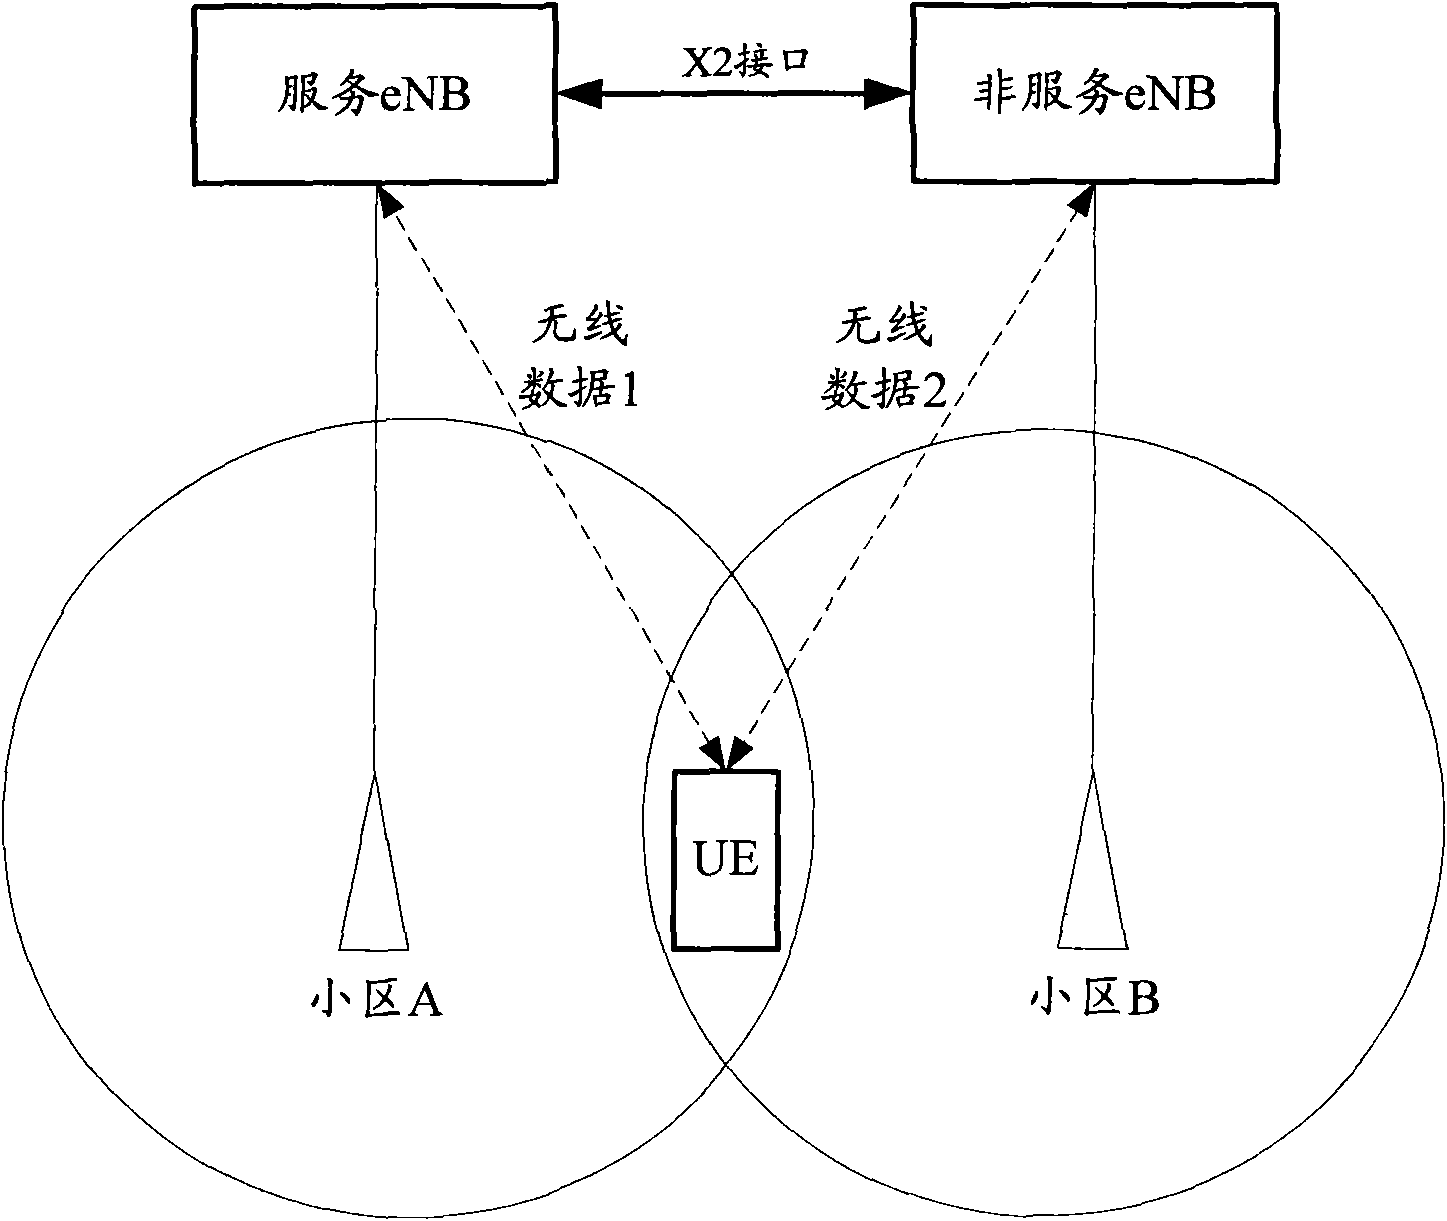 Processing method and system for uplink data retransmission